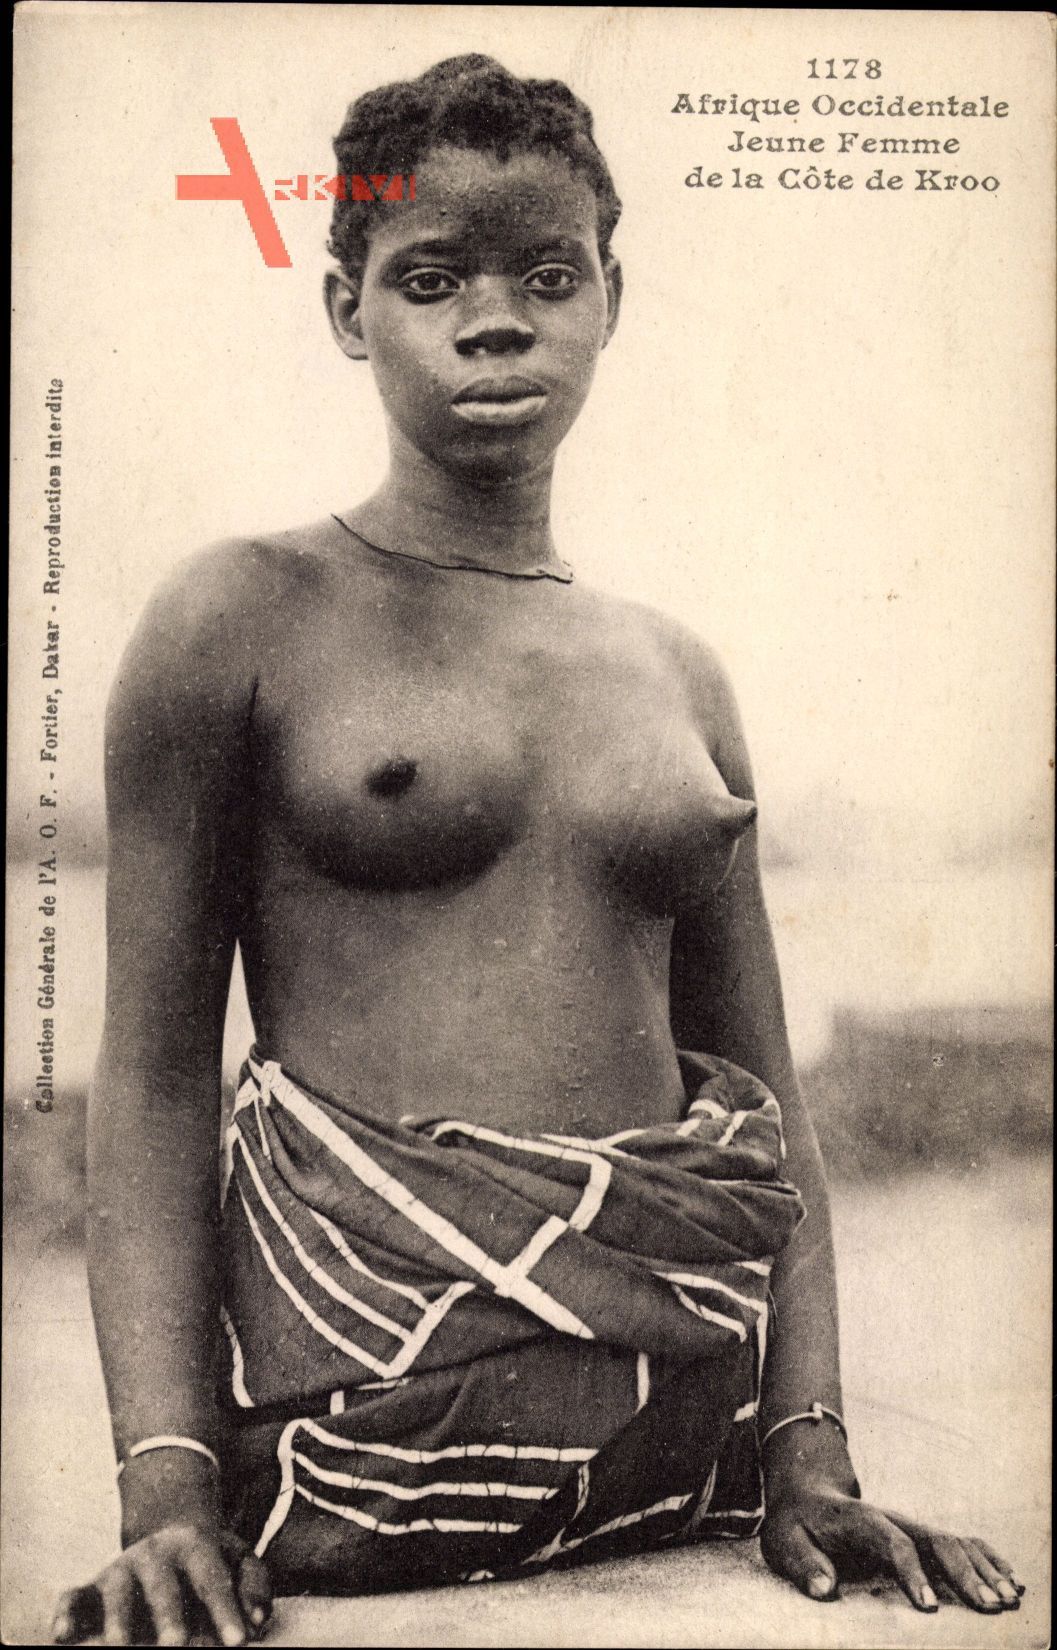 Afrique Occidentale, Jeune Femme de la Côte de Kroo, Barbusig, Afrikanerin